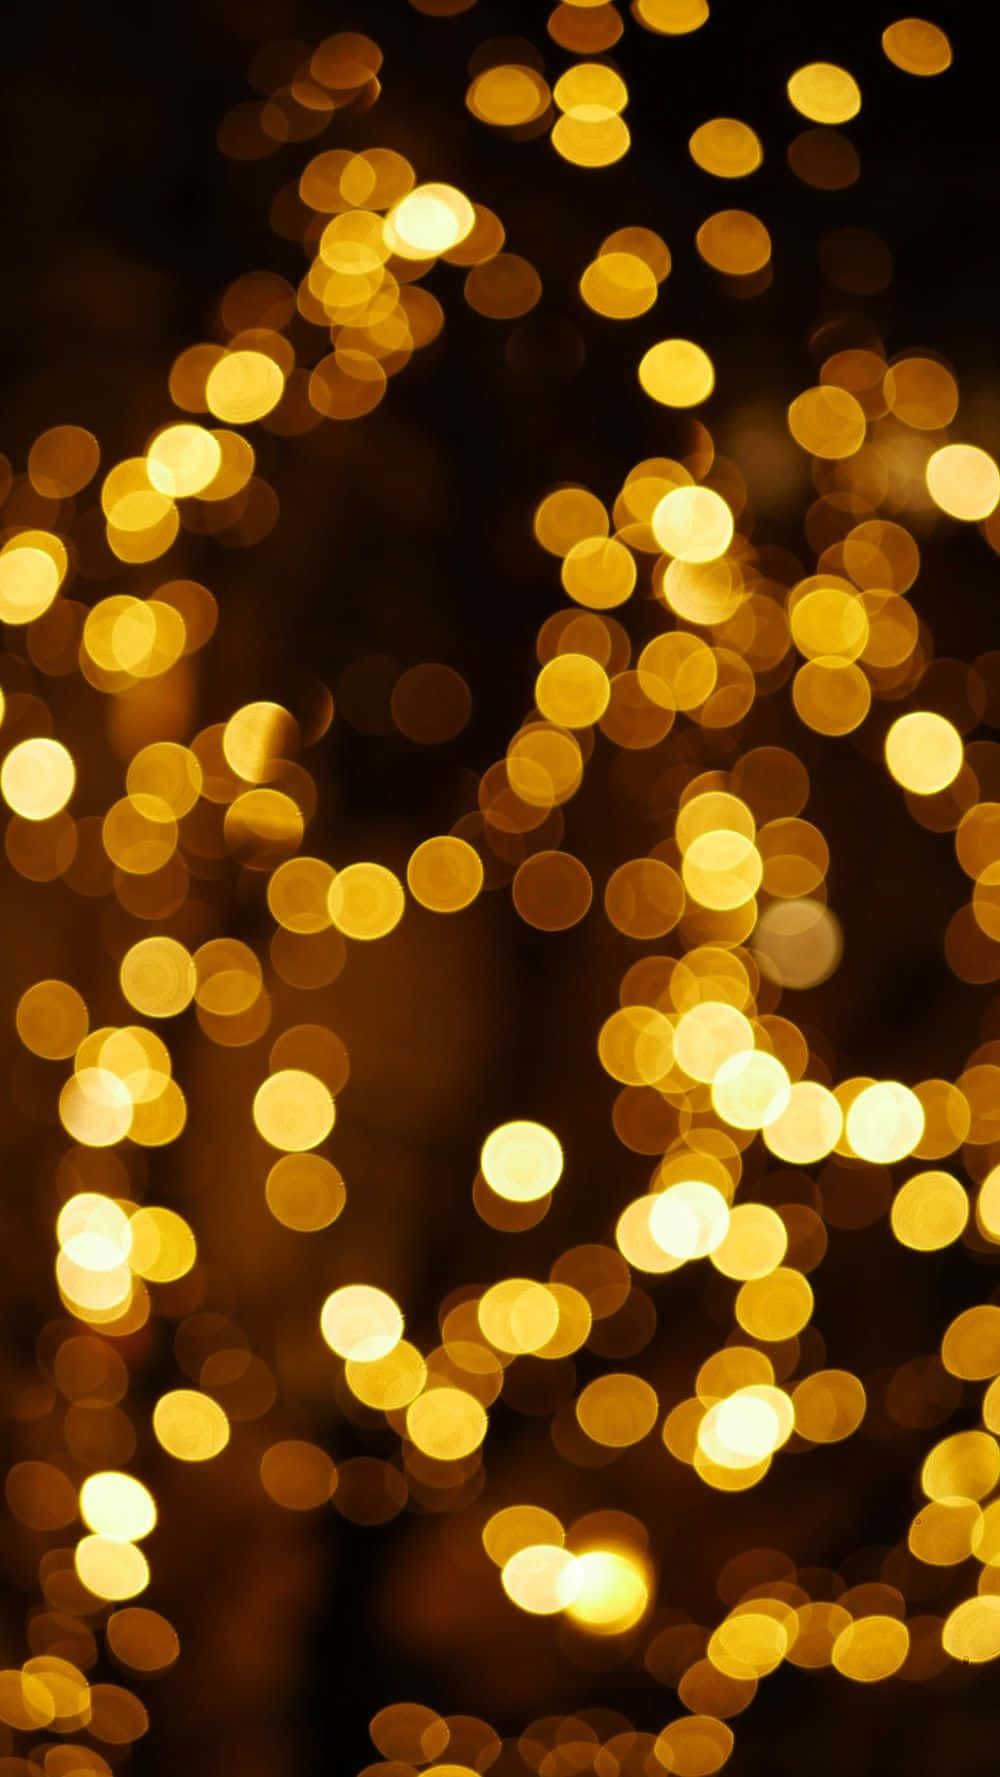 Bokeh lights in the night - Christmas lights